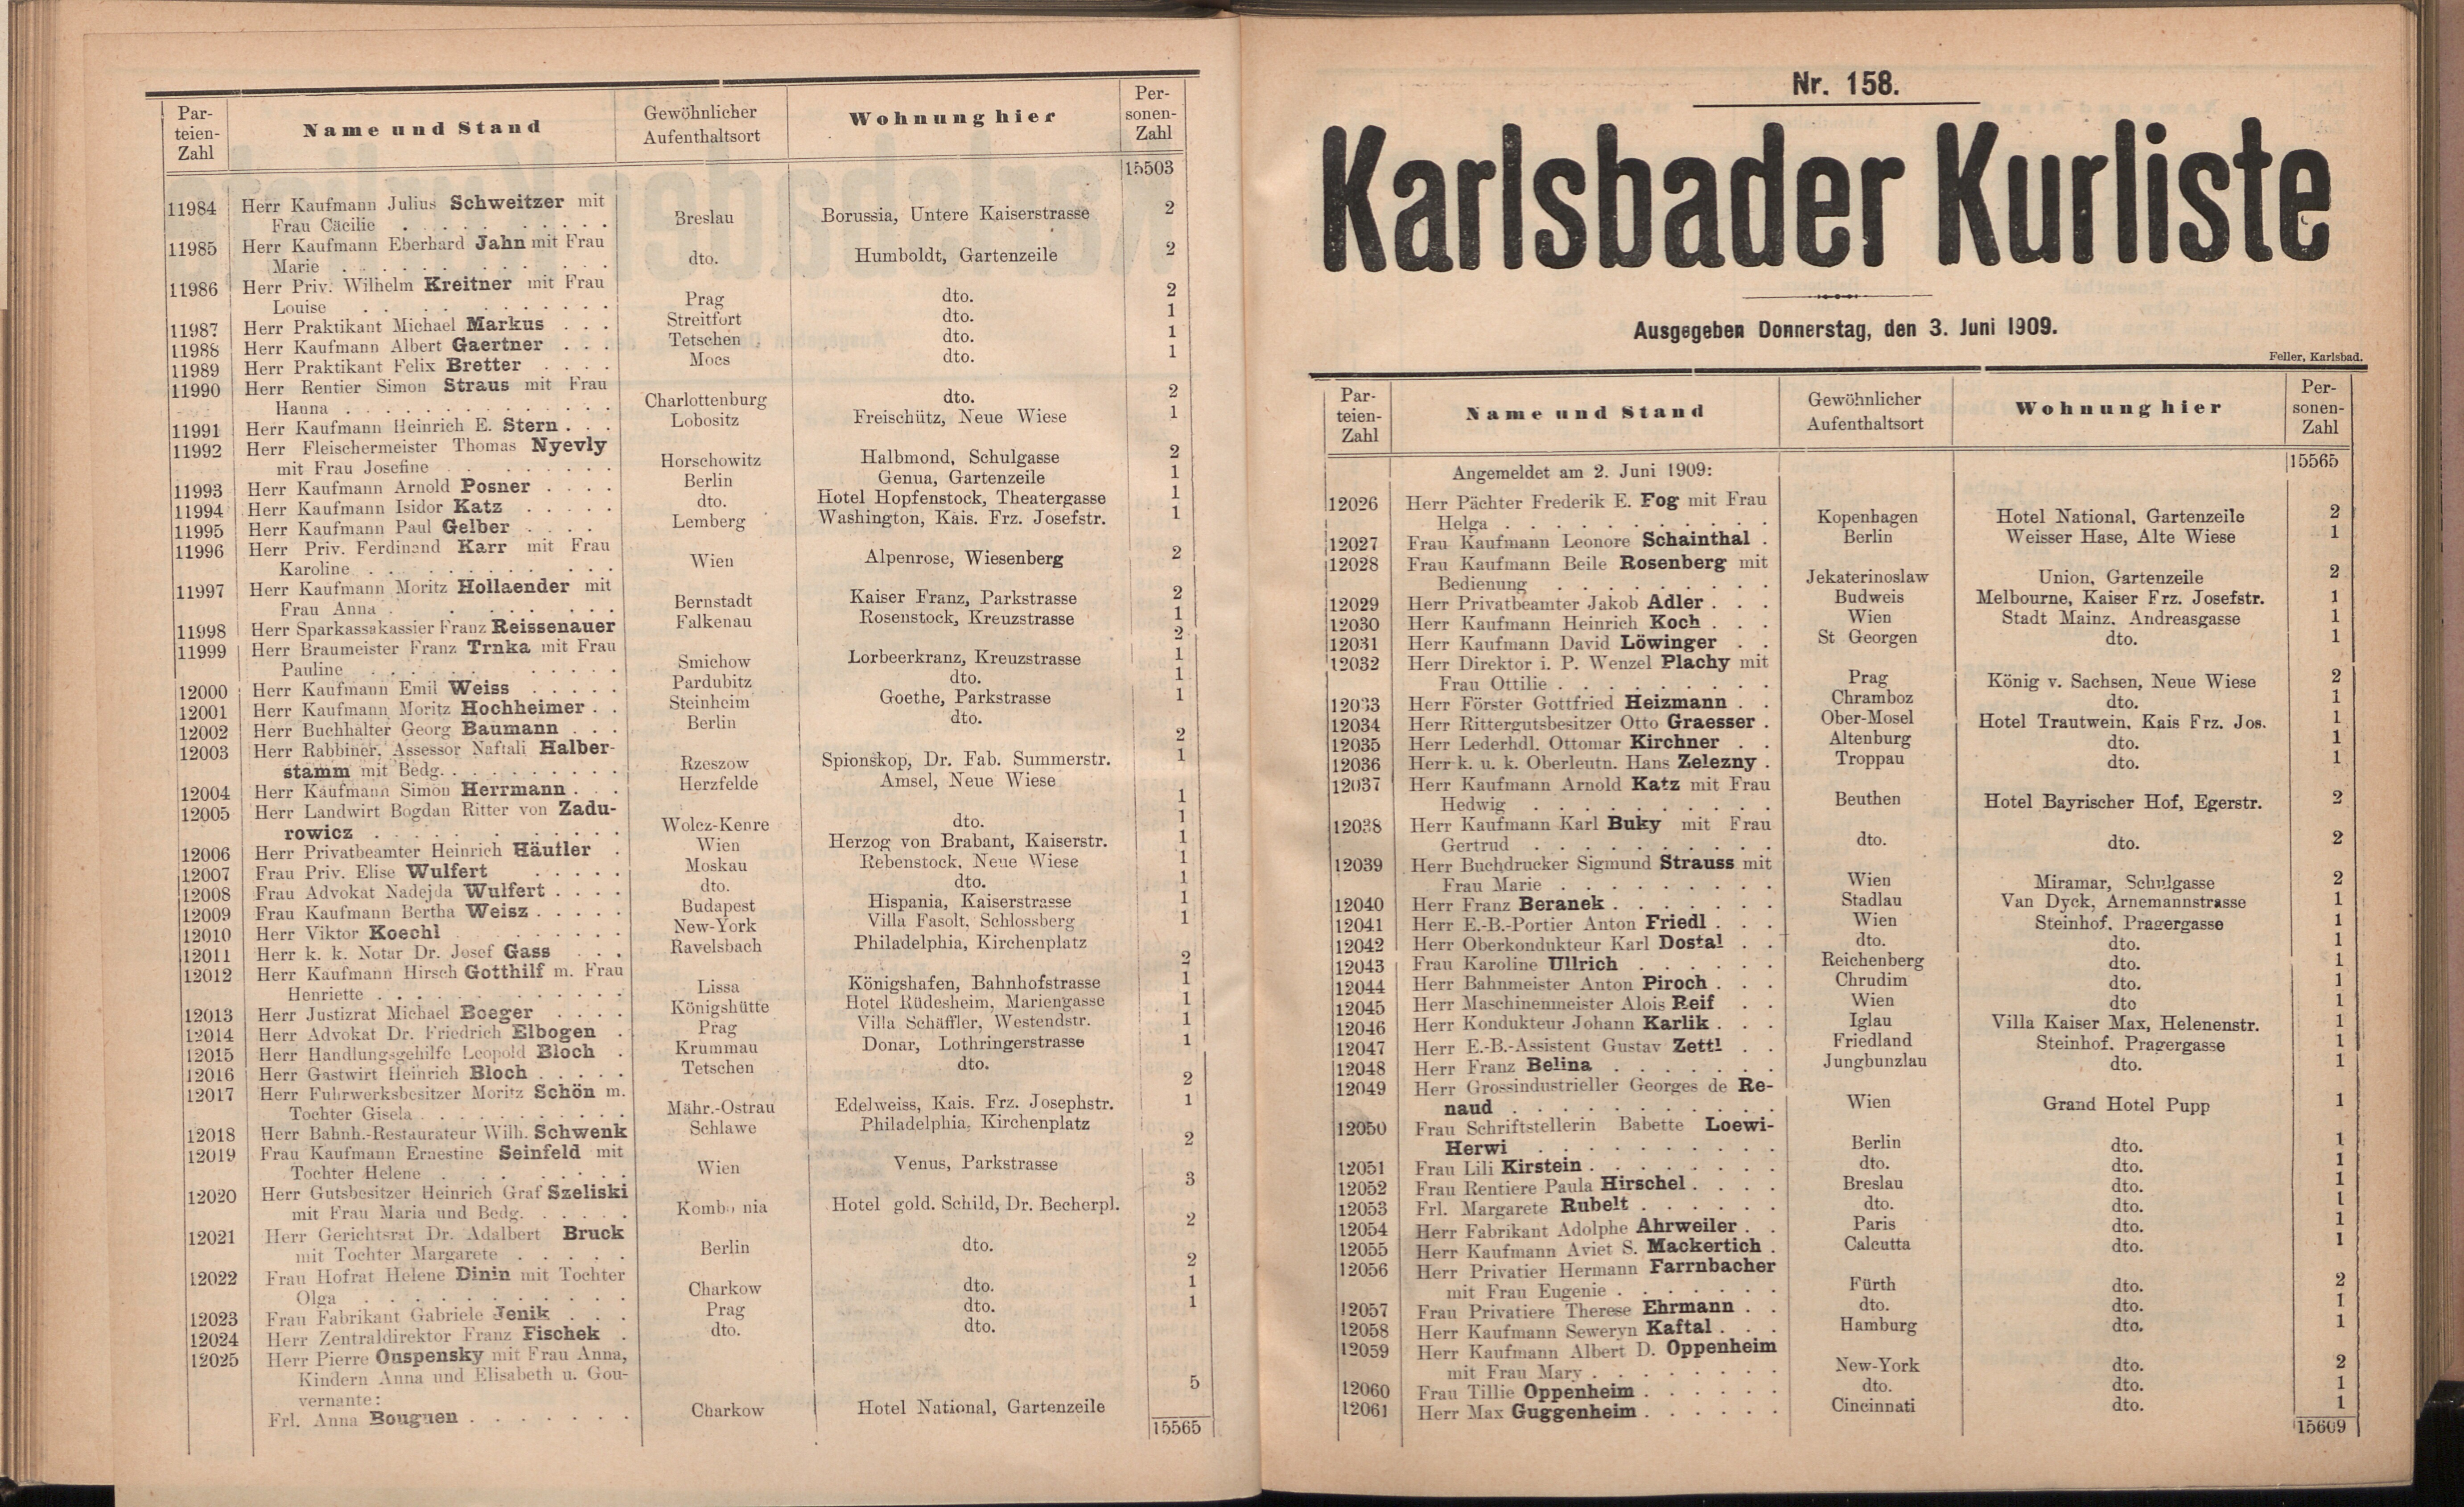 275. soap-kv_knihovna_karlsbader-kurliste-1909_2750